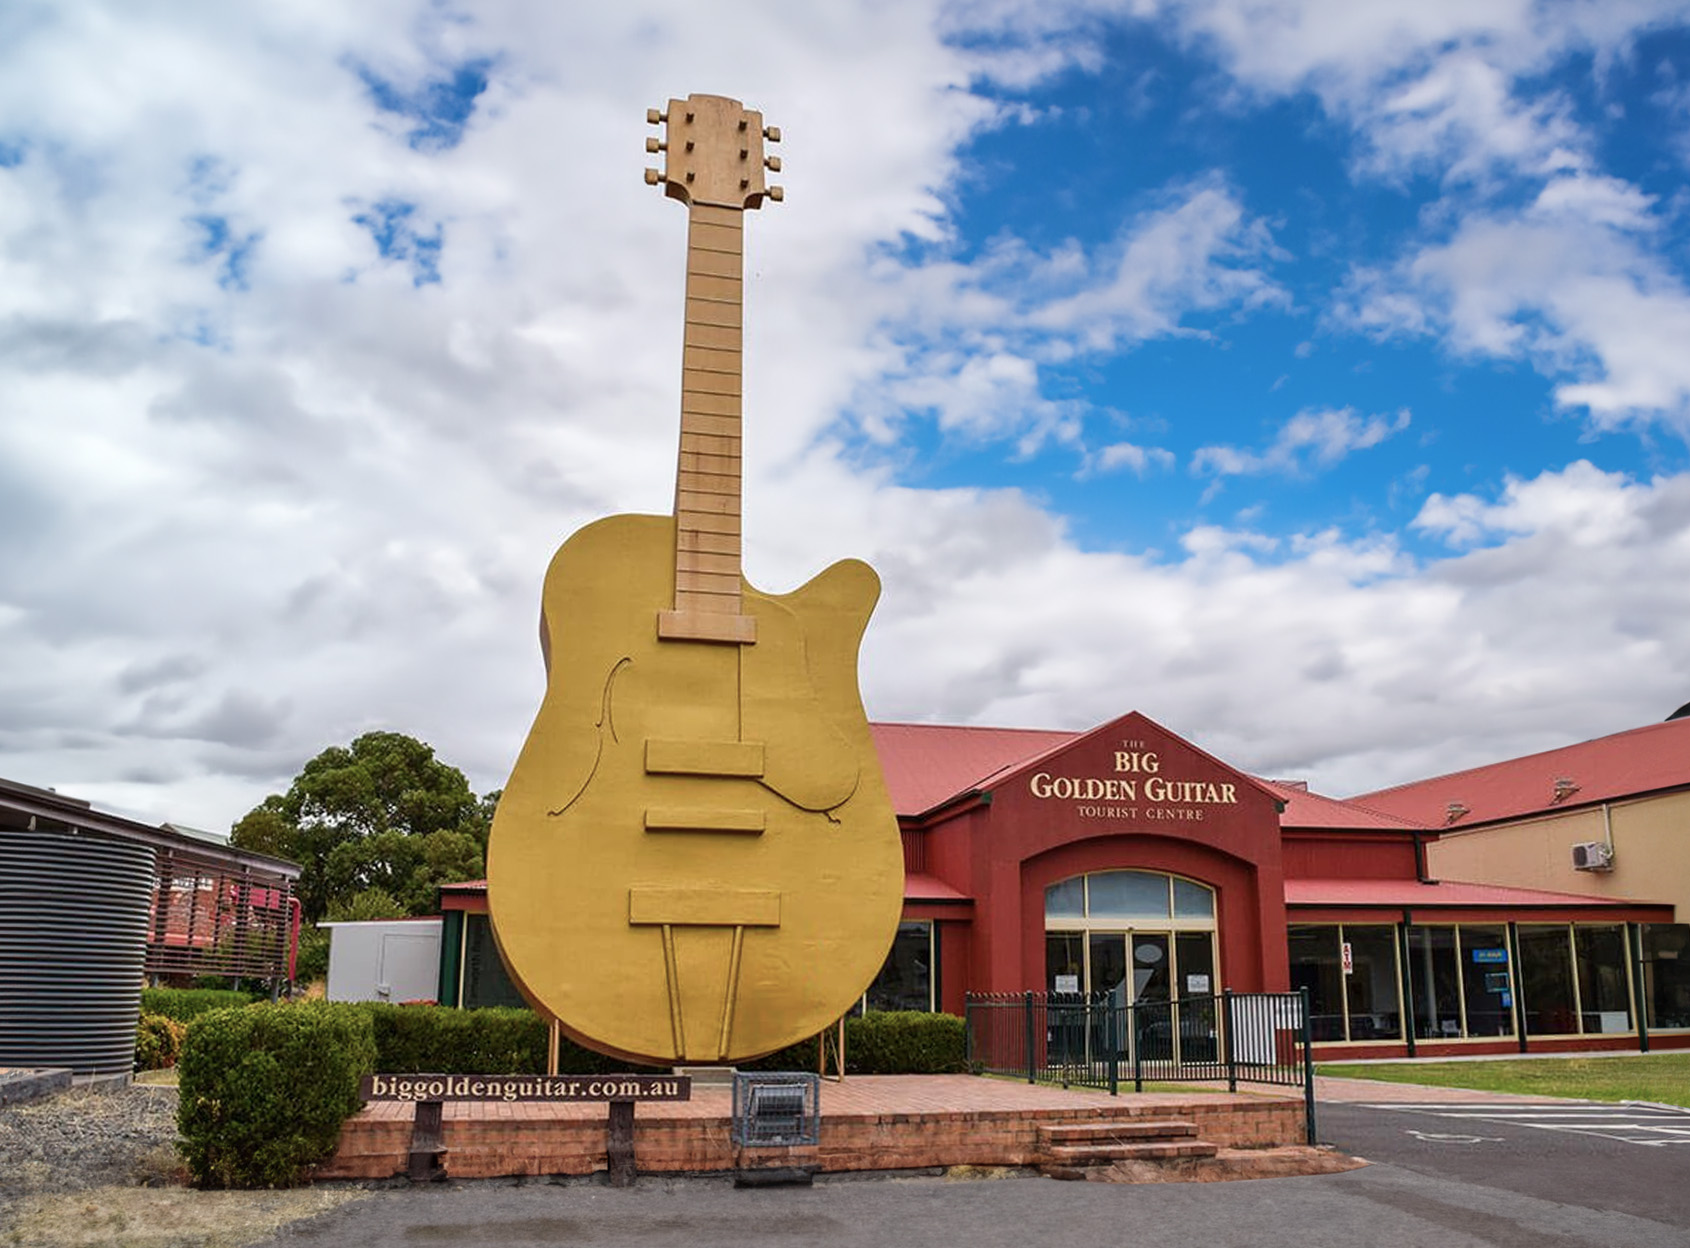 The Big Golden Guitar located at Tamworth, NSW, Australia